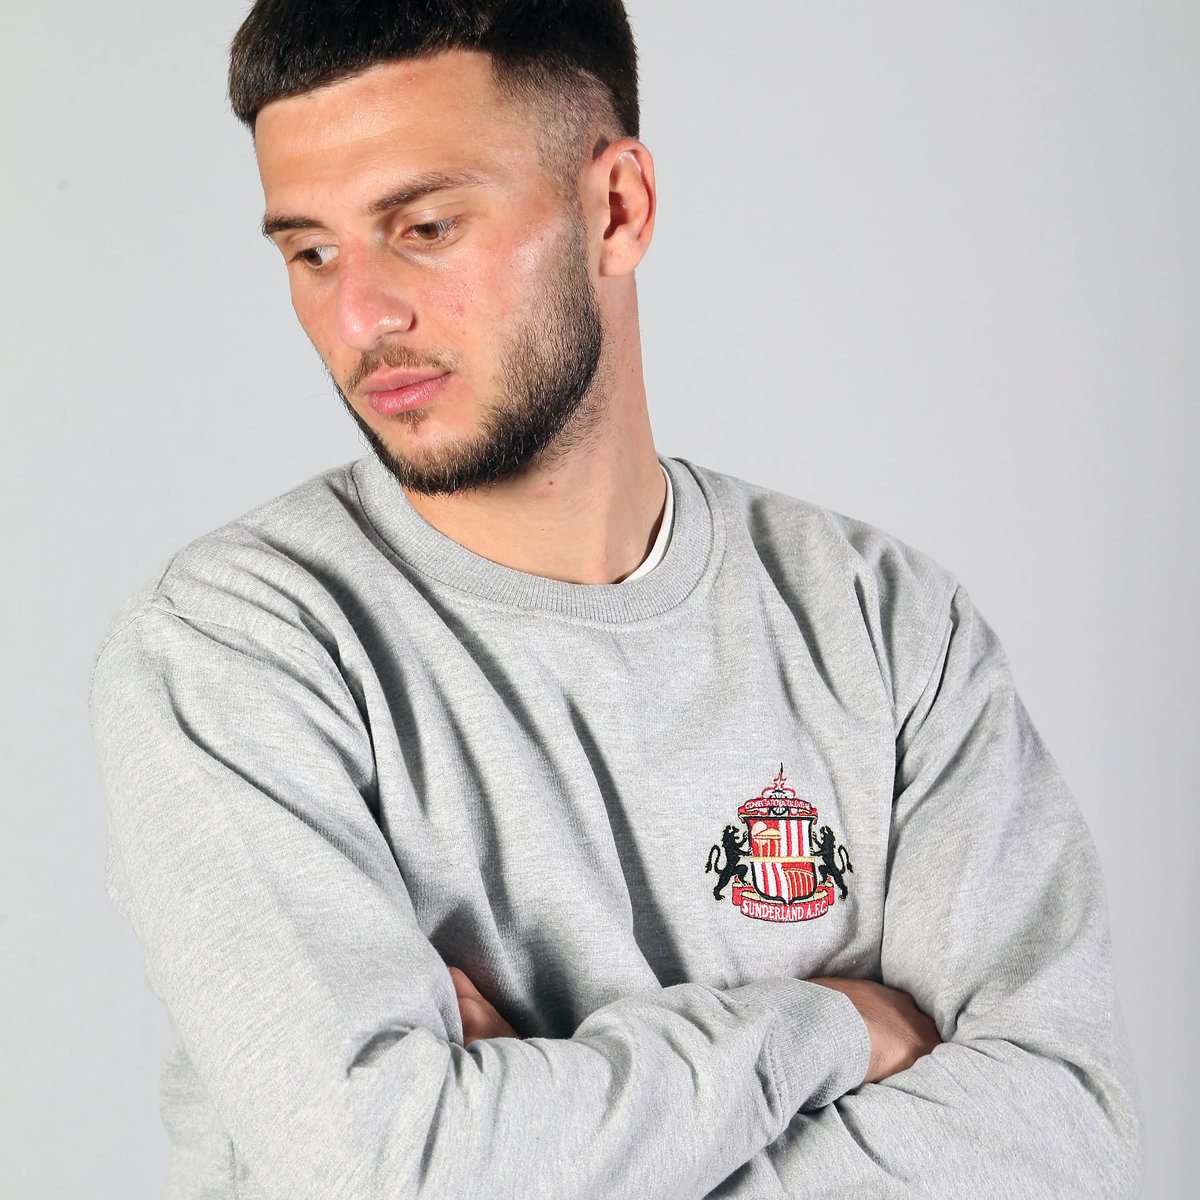 Buy the SAFC Lounge Sweatshirt online at Sunderland AFC Store